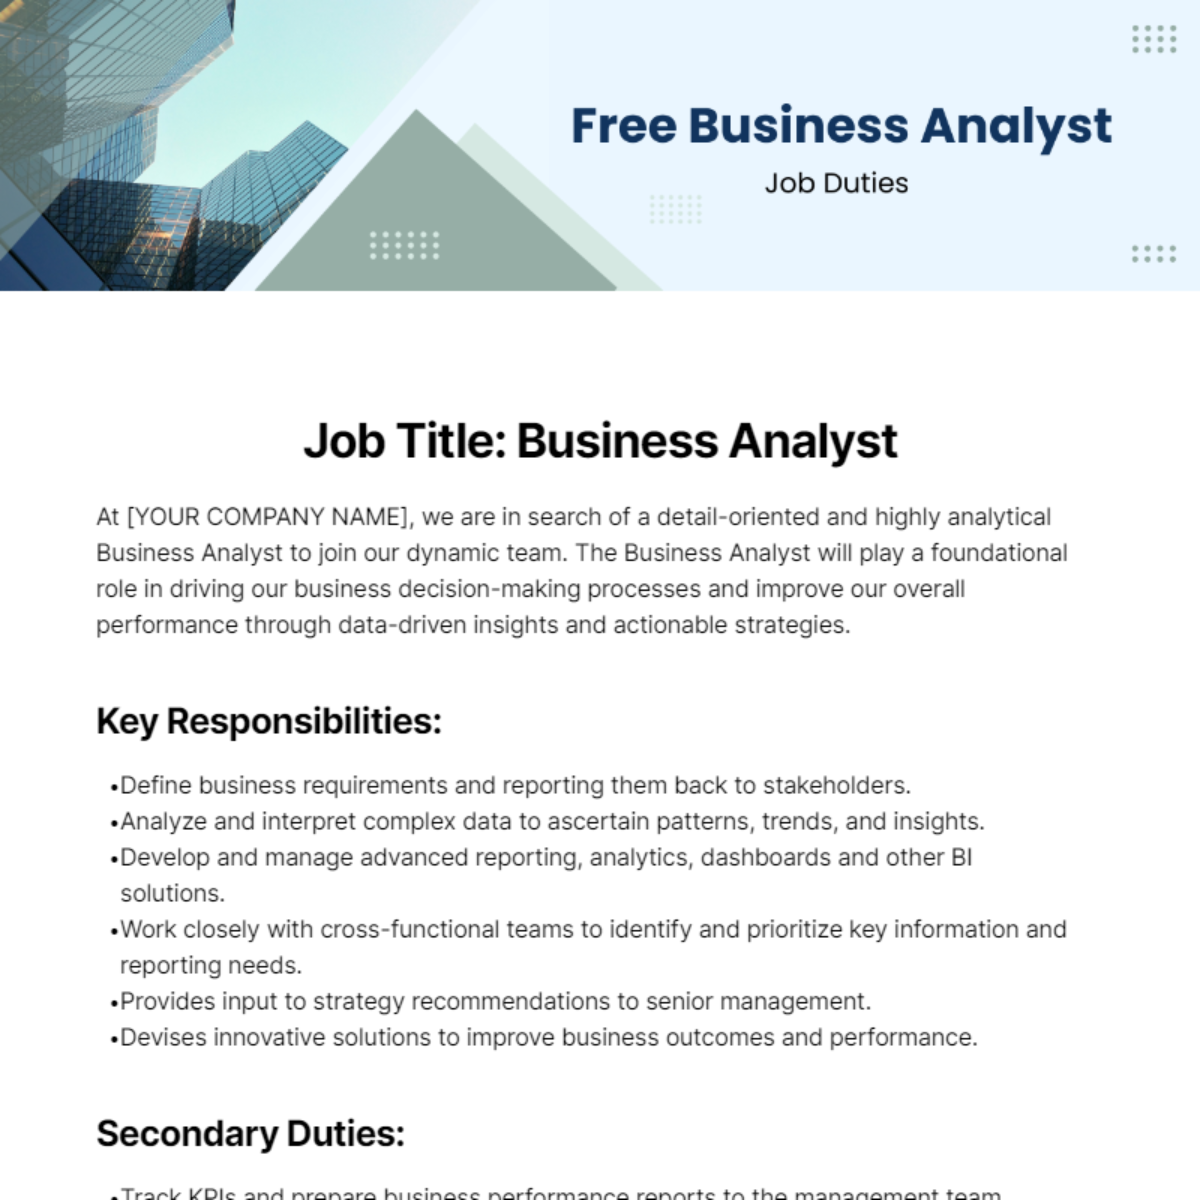 Free Business Analyst Job Duties Template